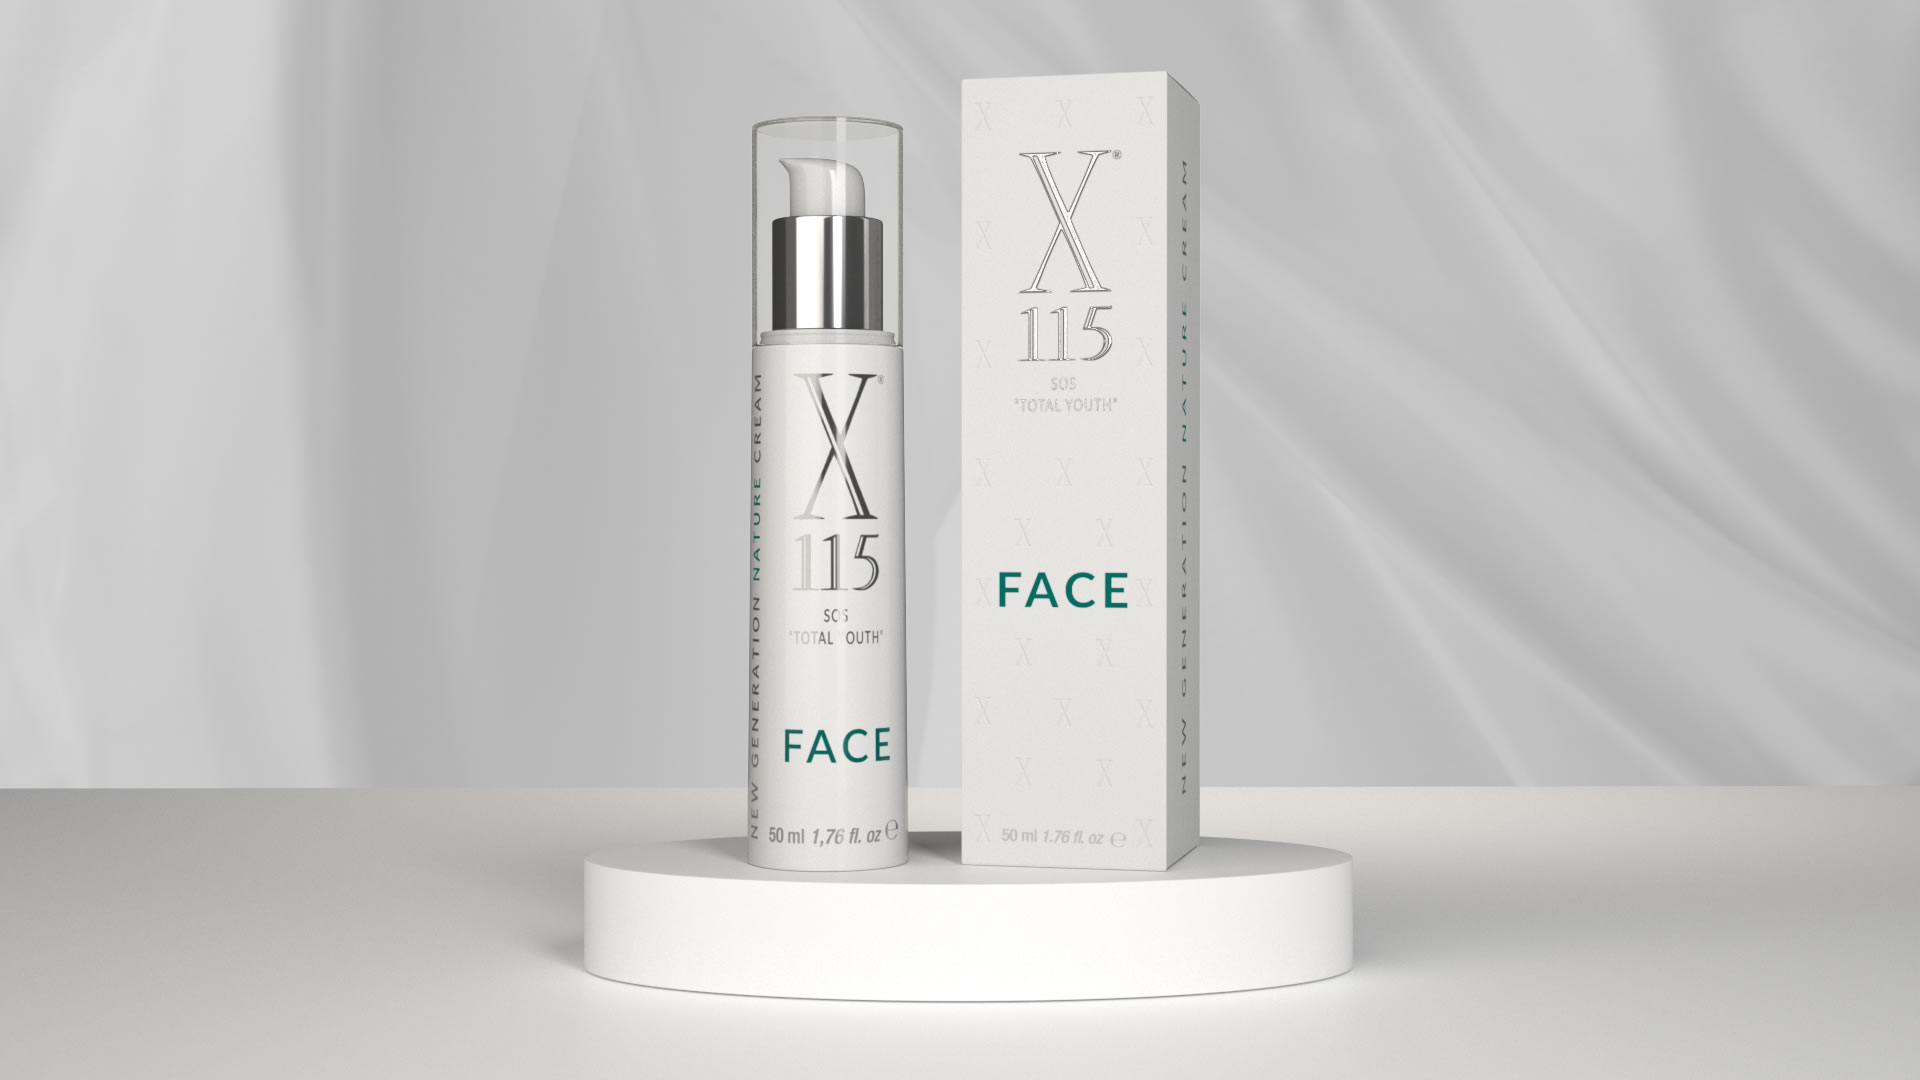 X115 Face - Anti-wrinkle Face Cream